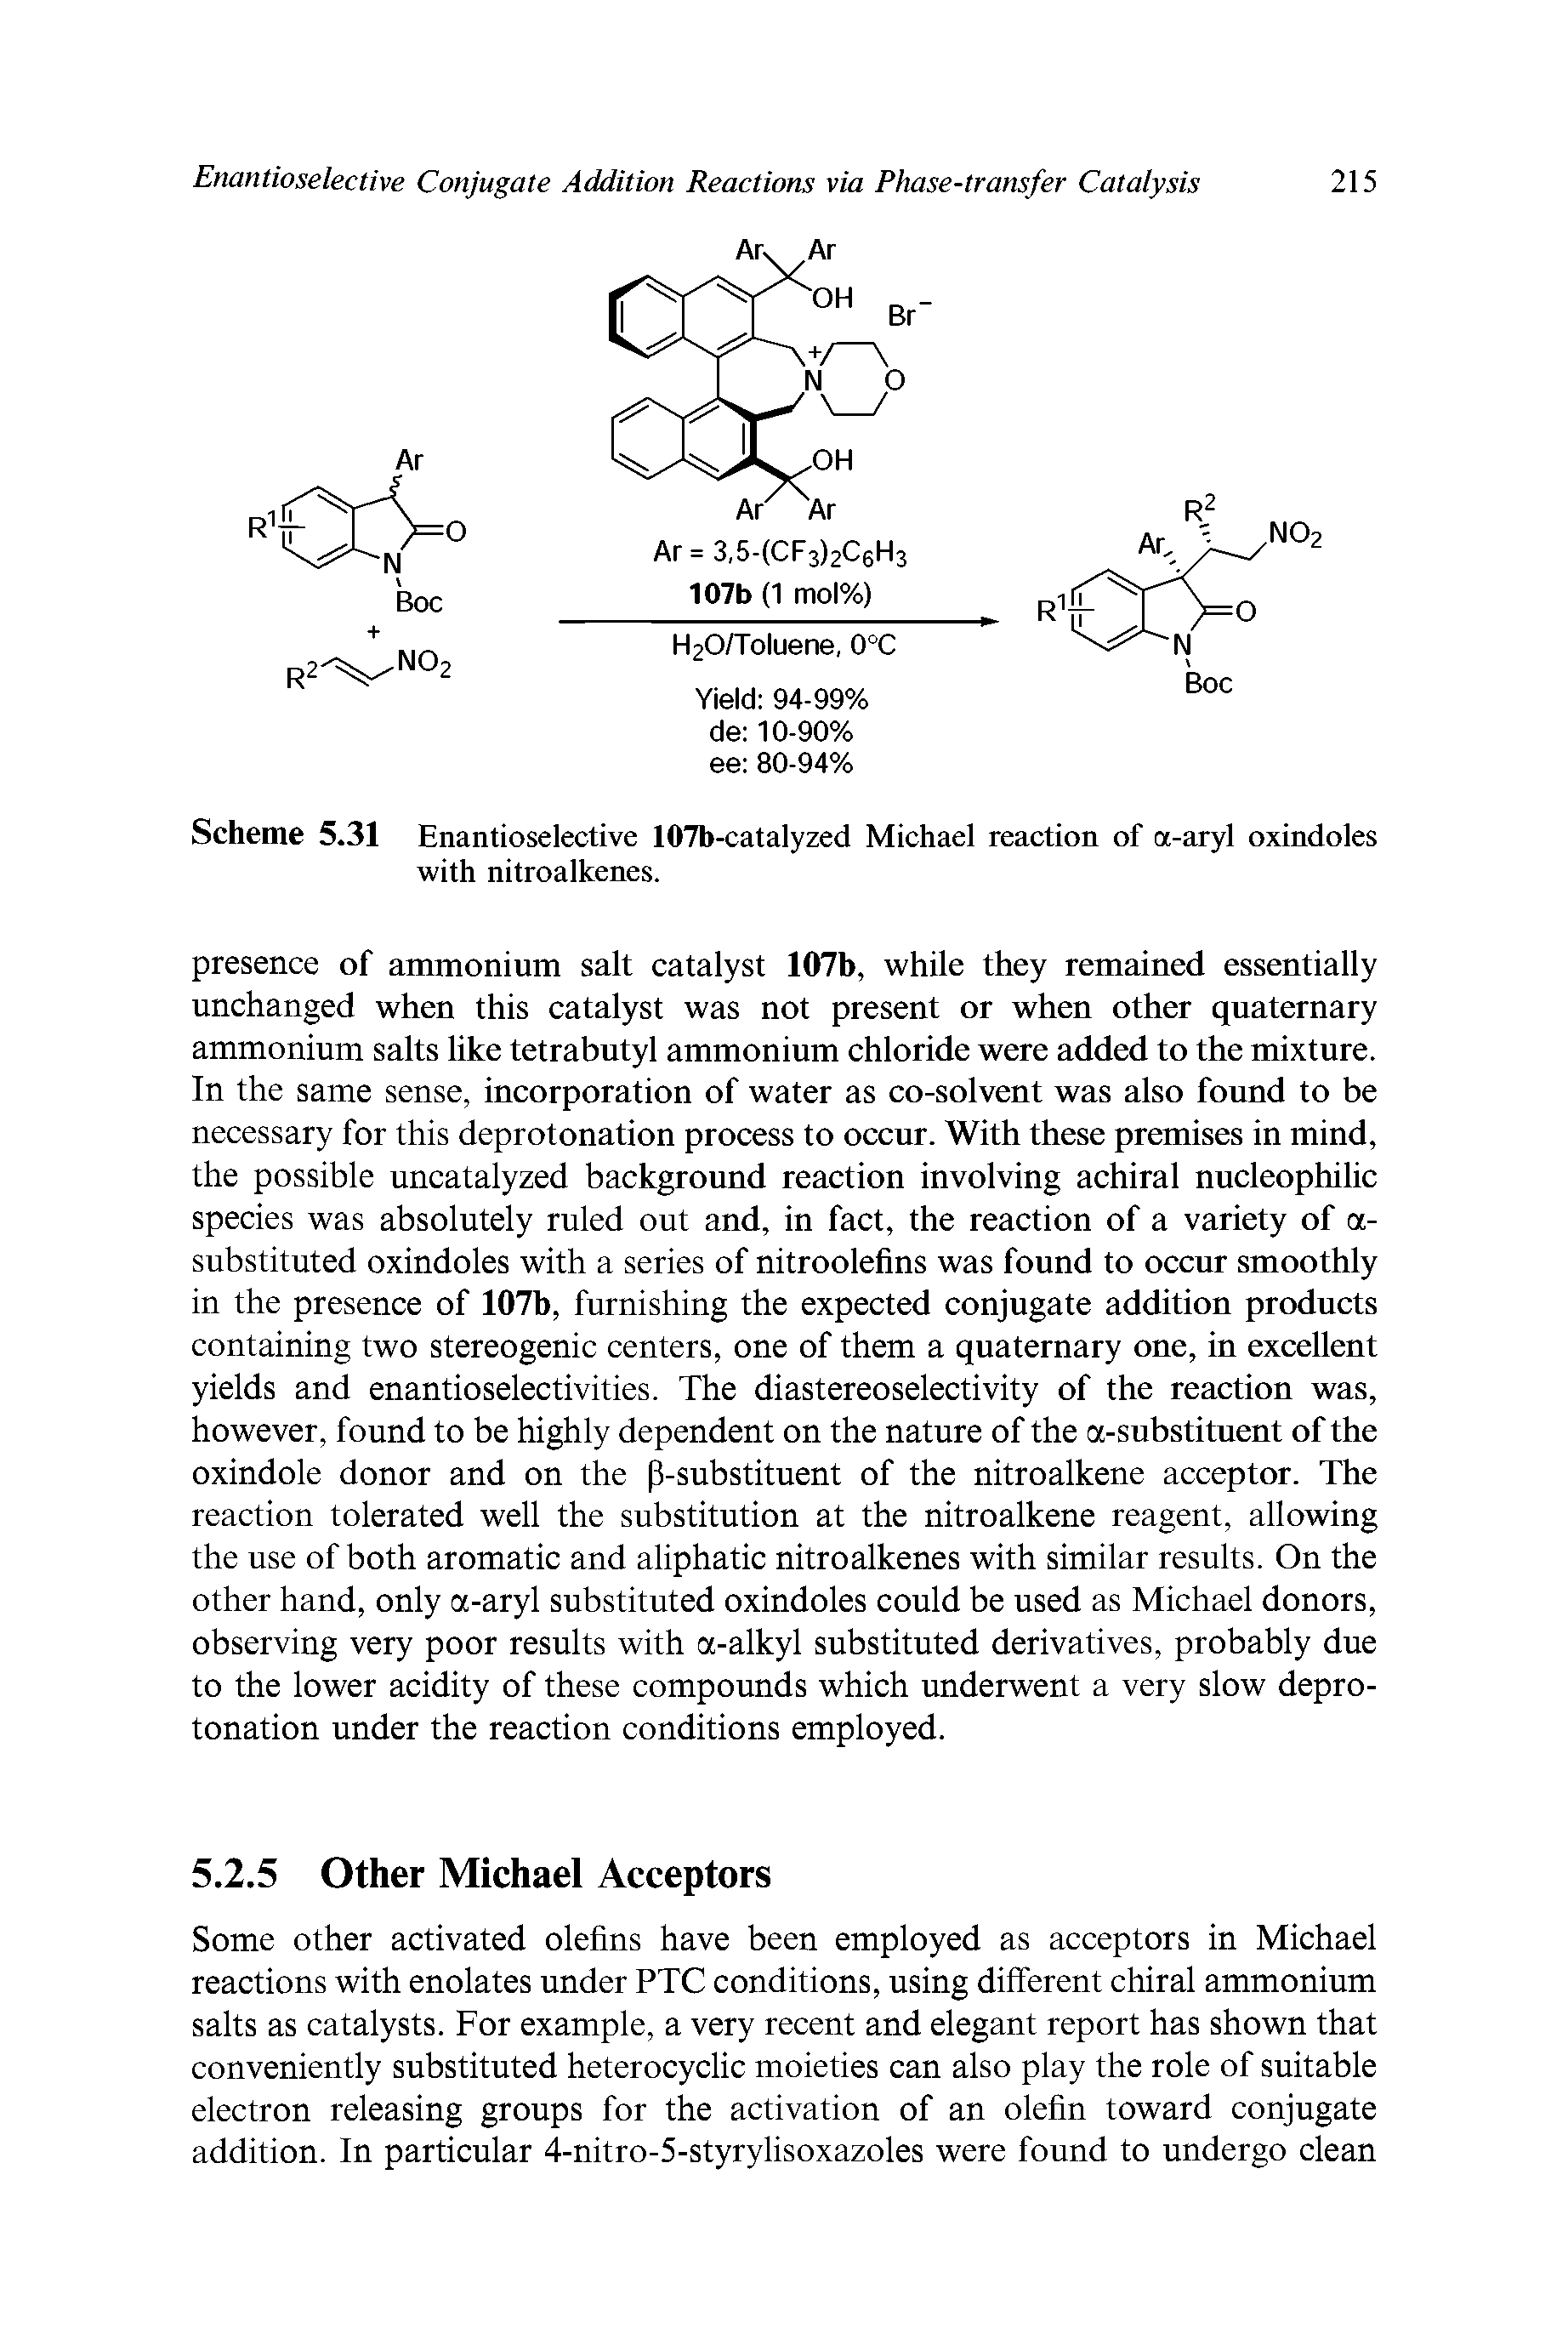 Scheme 5.31 Enantioselective 107b-catalyzed Michael reaction of a-aryl oxindoles with nitroalkenes.